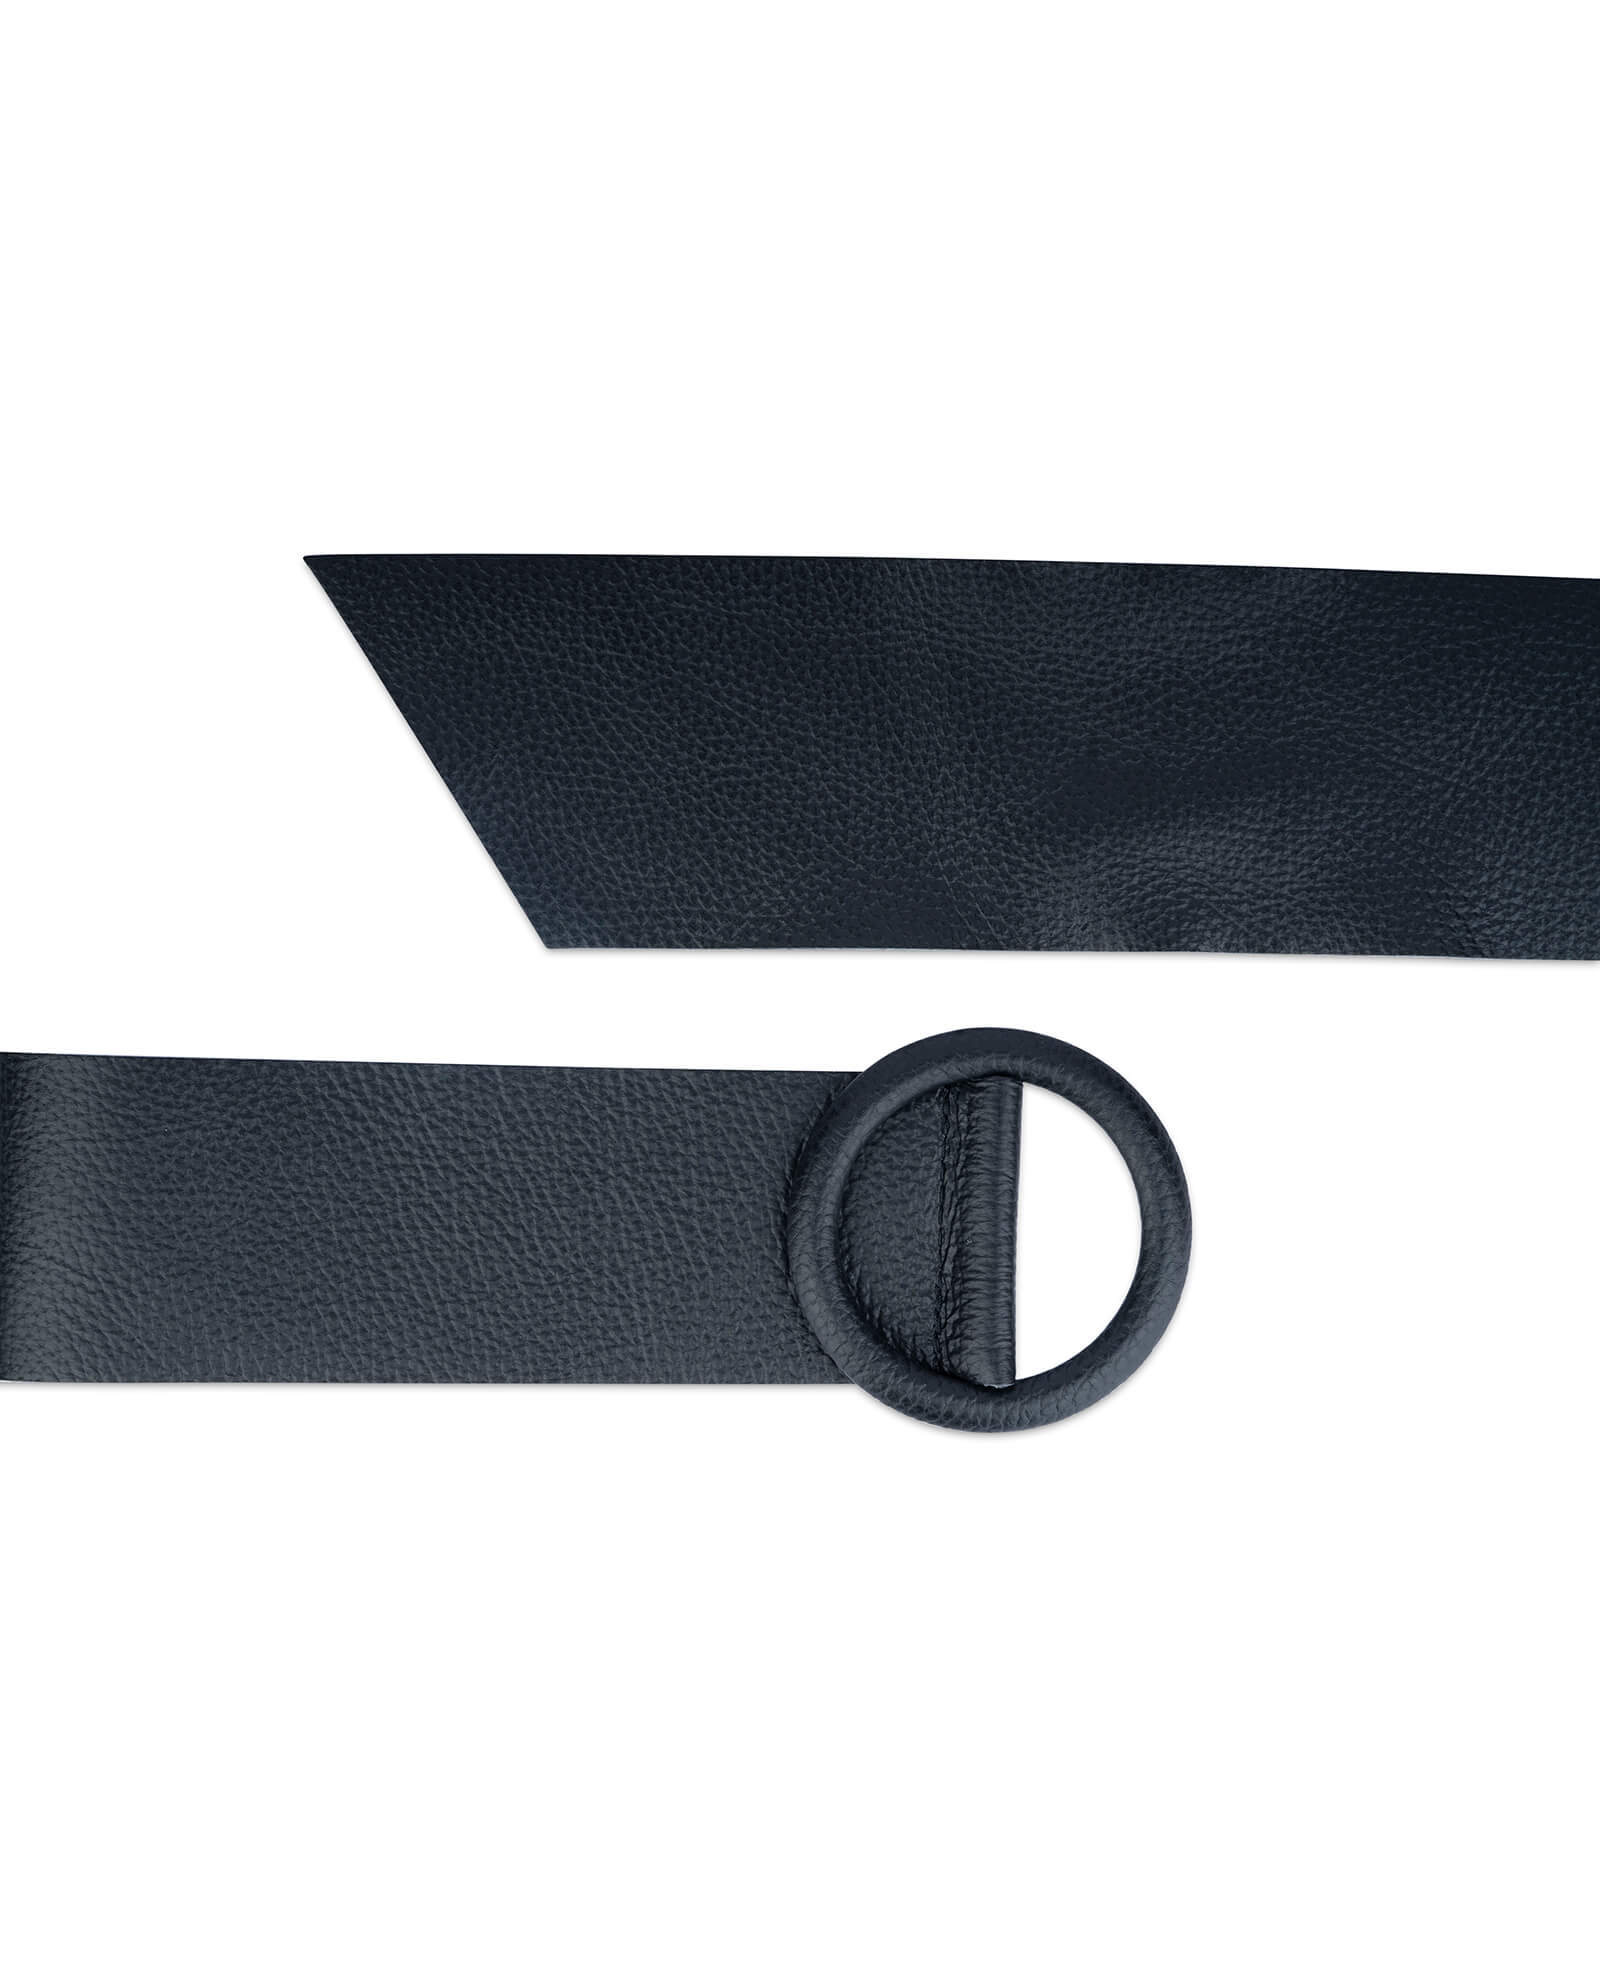 SATYAM Women's Lace-up Cinch Belt Corset Style Elastic Waist Belt(Black) .  Belt for Saree, Western